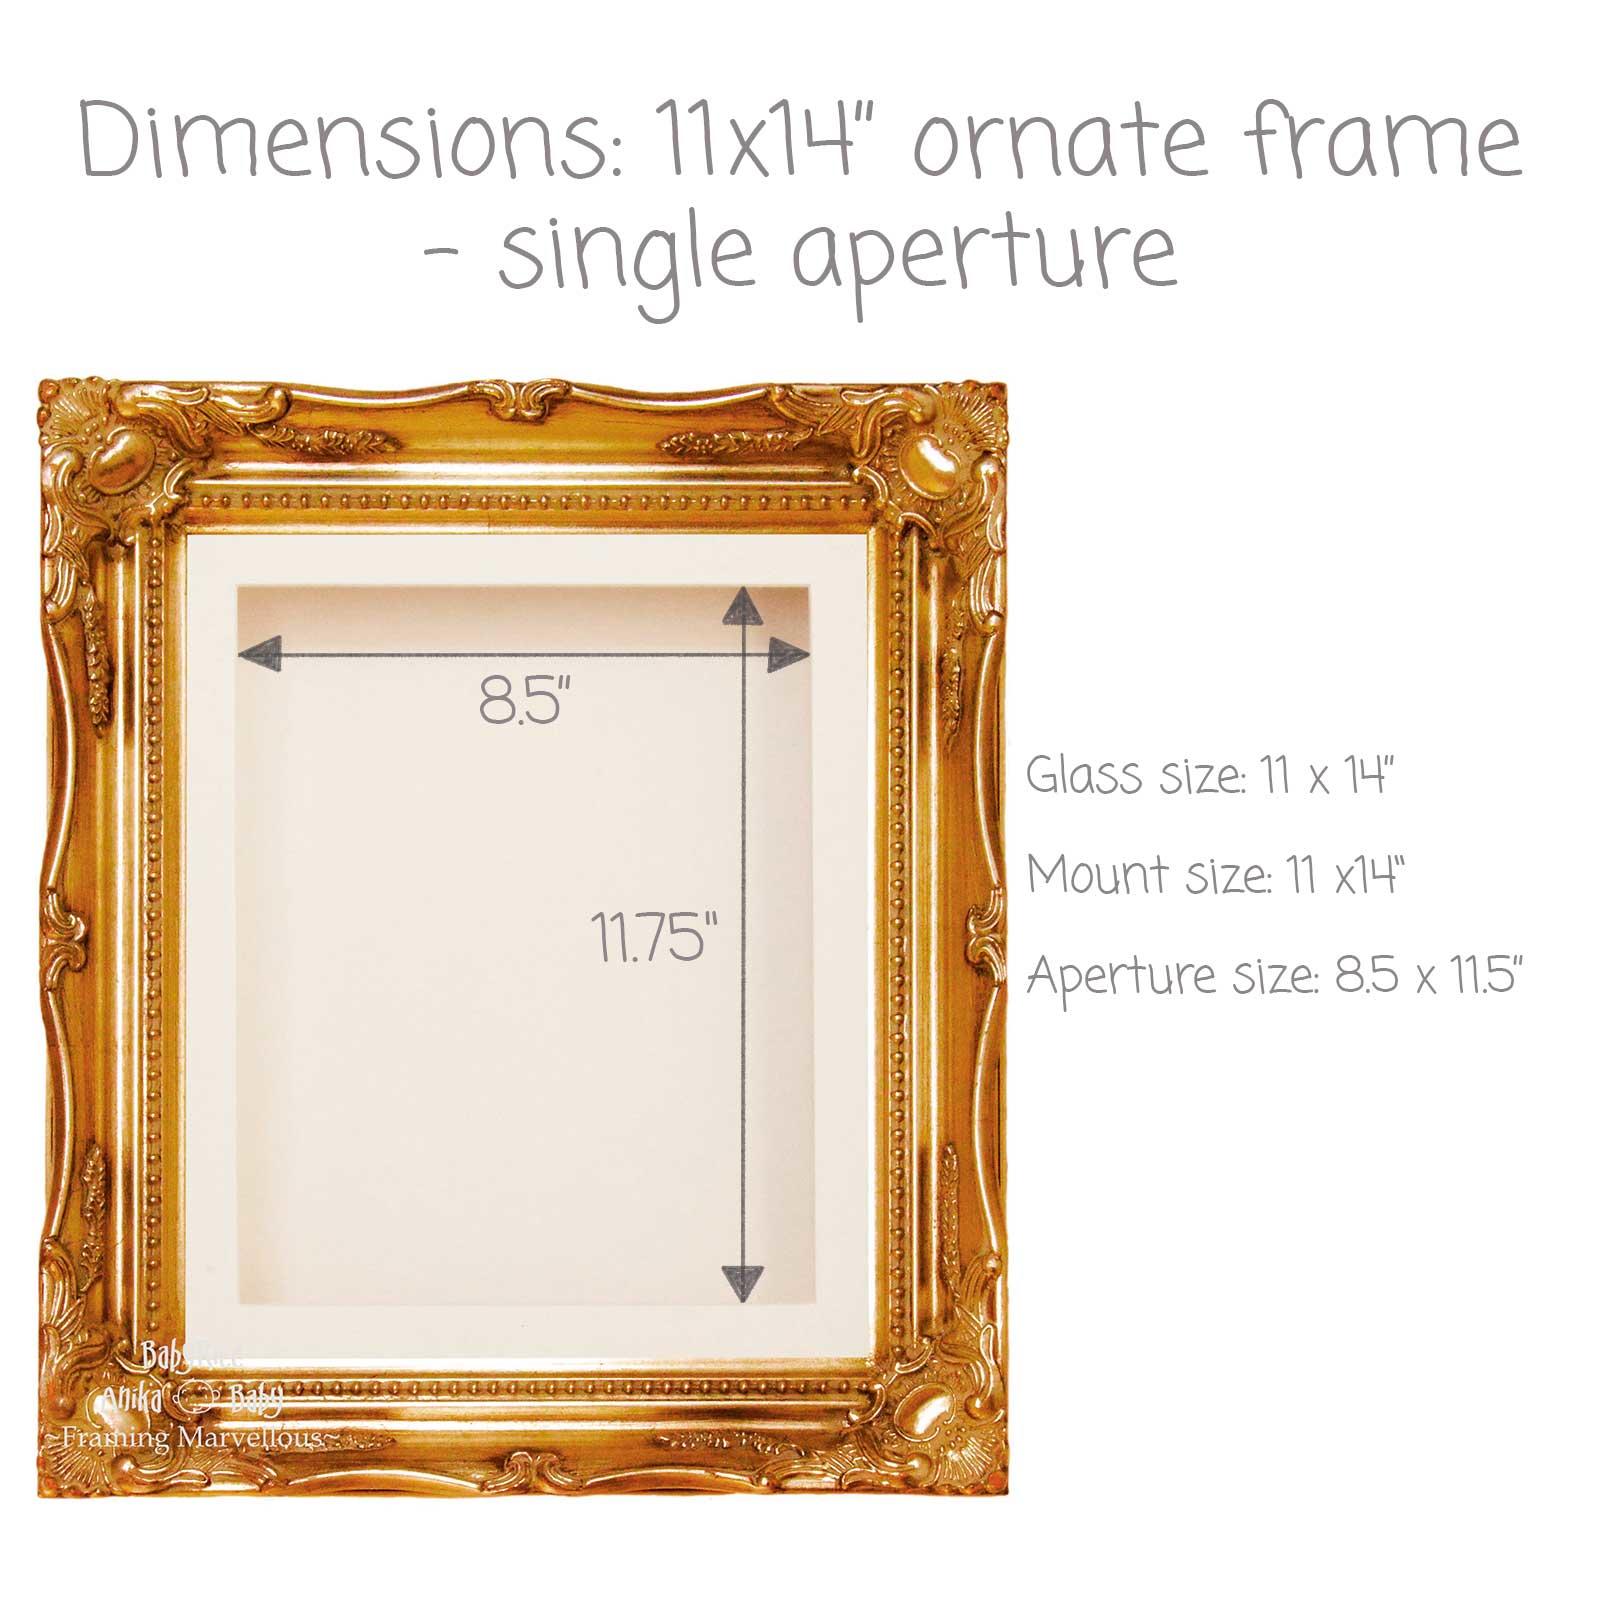 11x14" single hole dimensions